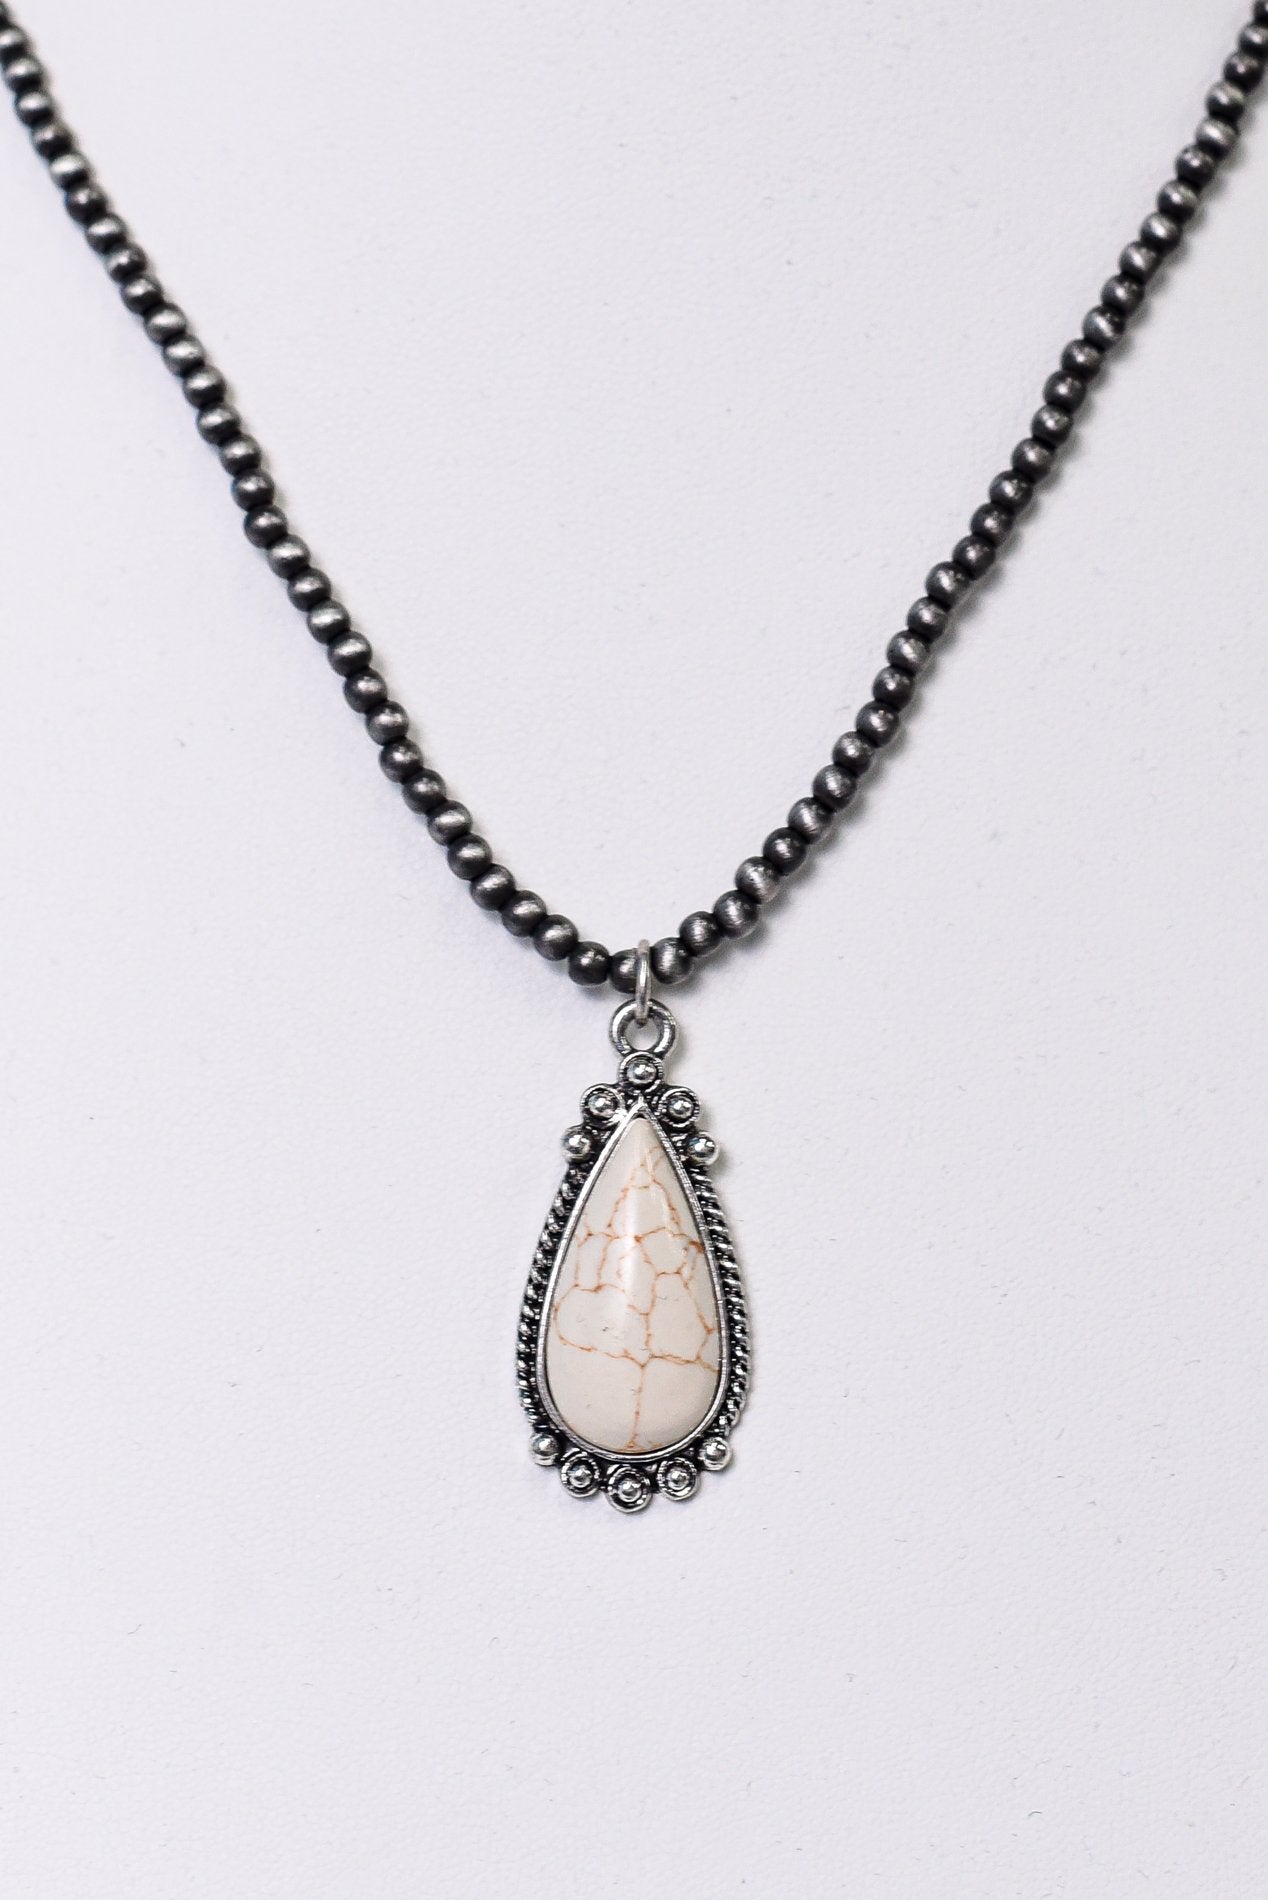 Ivory/Silver Teardrop Pendant/Beaded Necklace - NEK3641IV